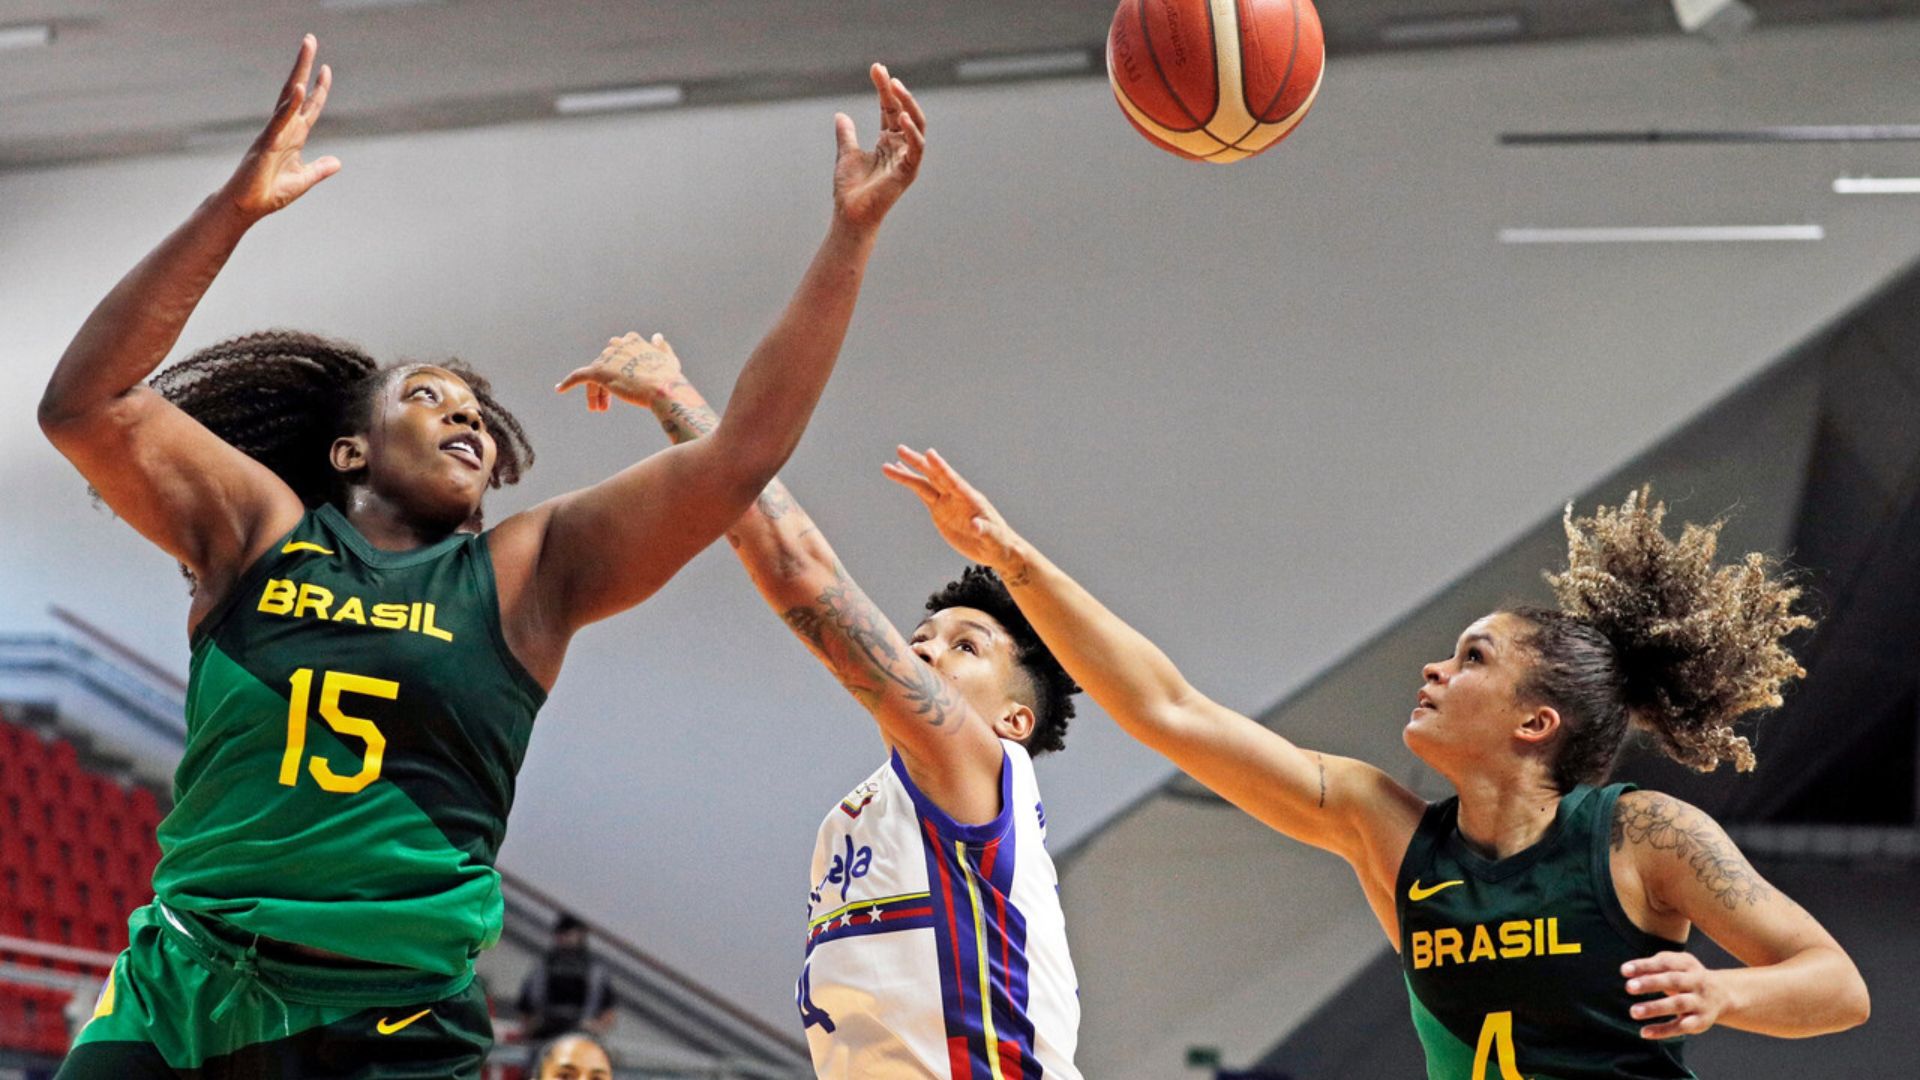 Female's Basketball: Brazil convincingly defeated Venezuela